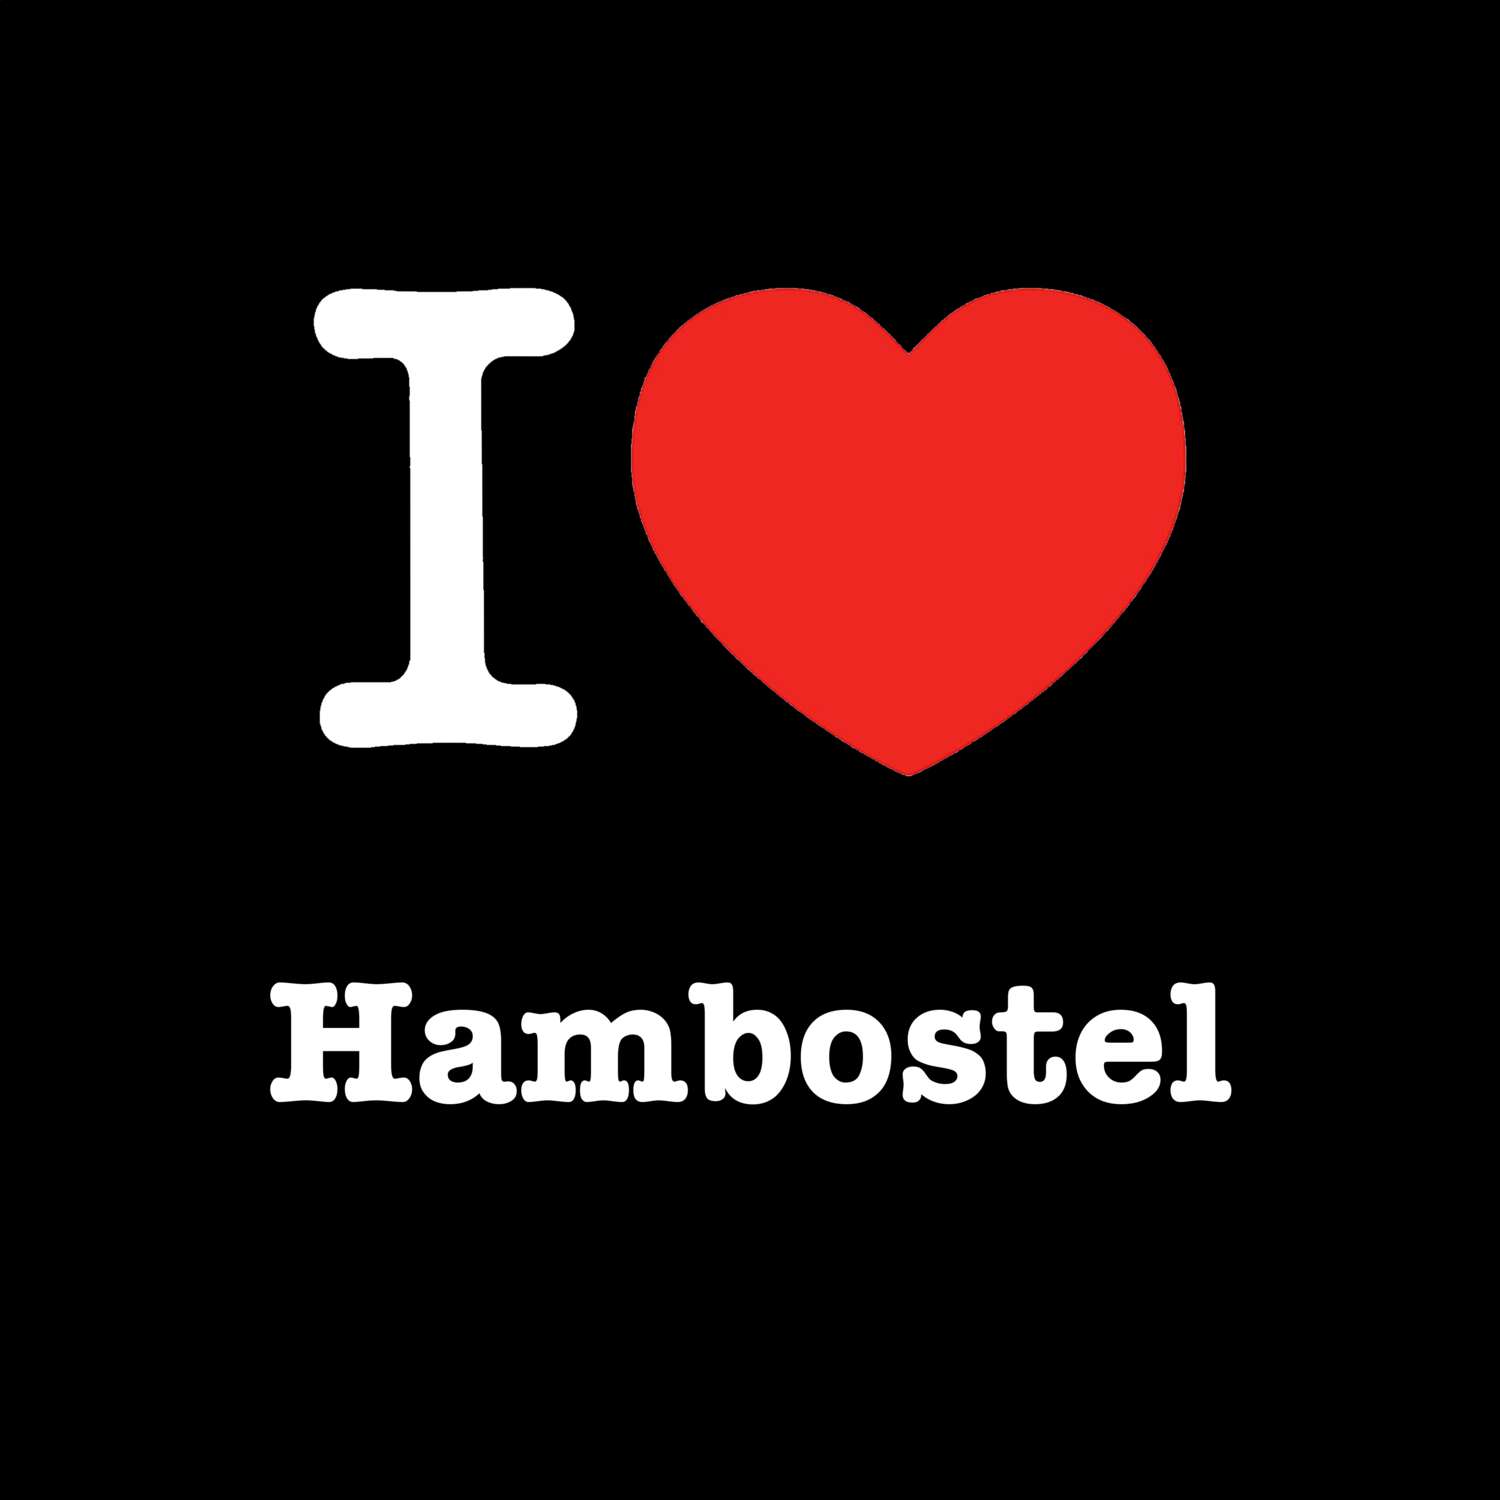 Hambostel T-Shirt »I love«